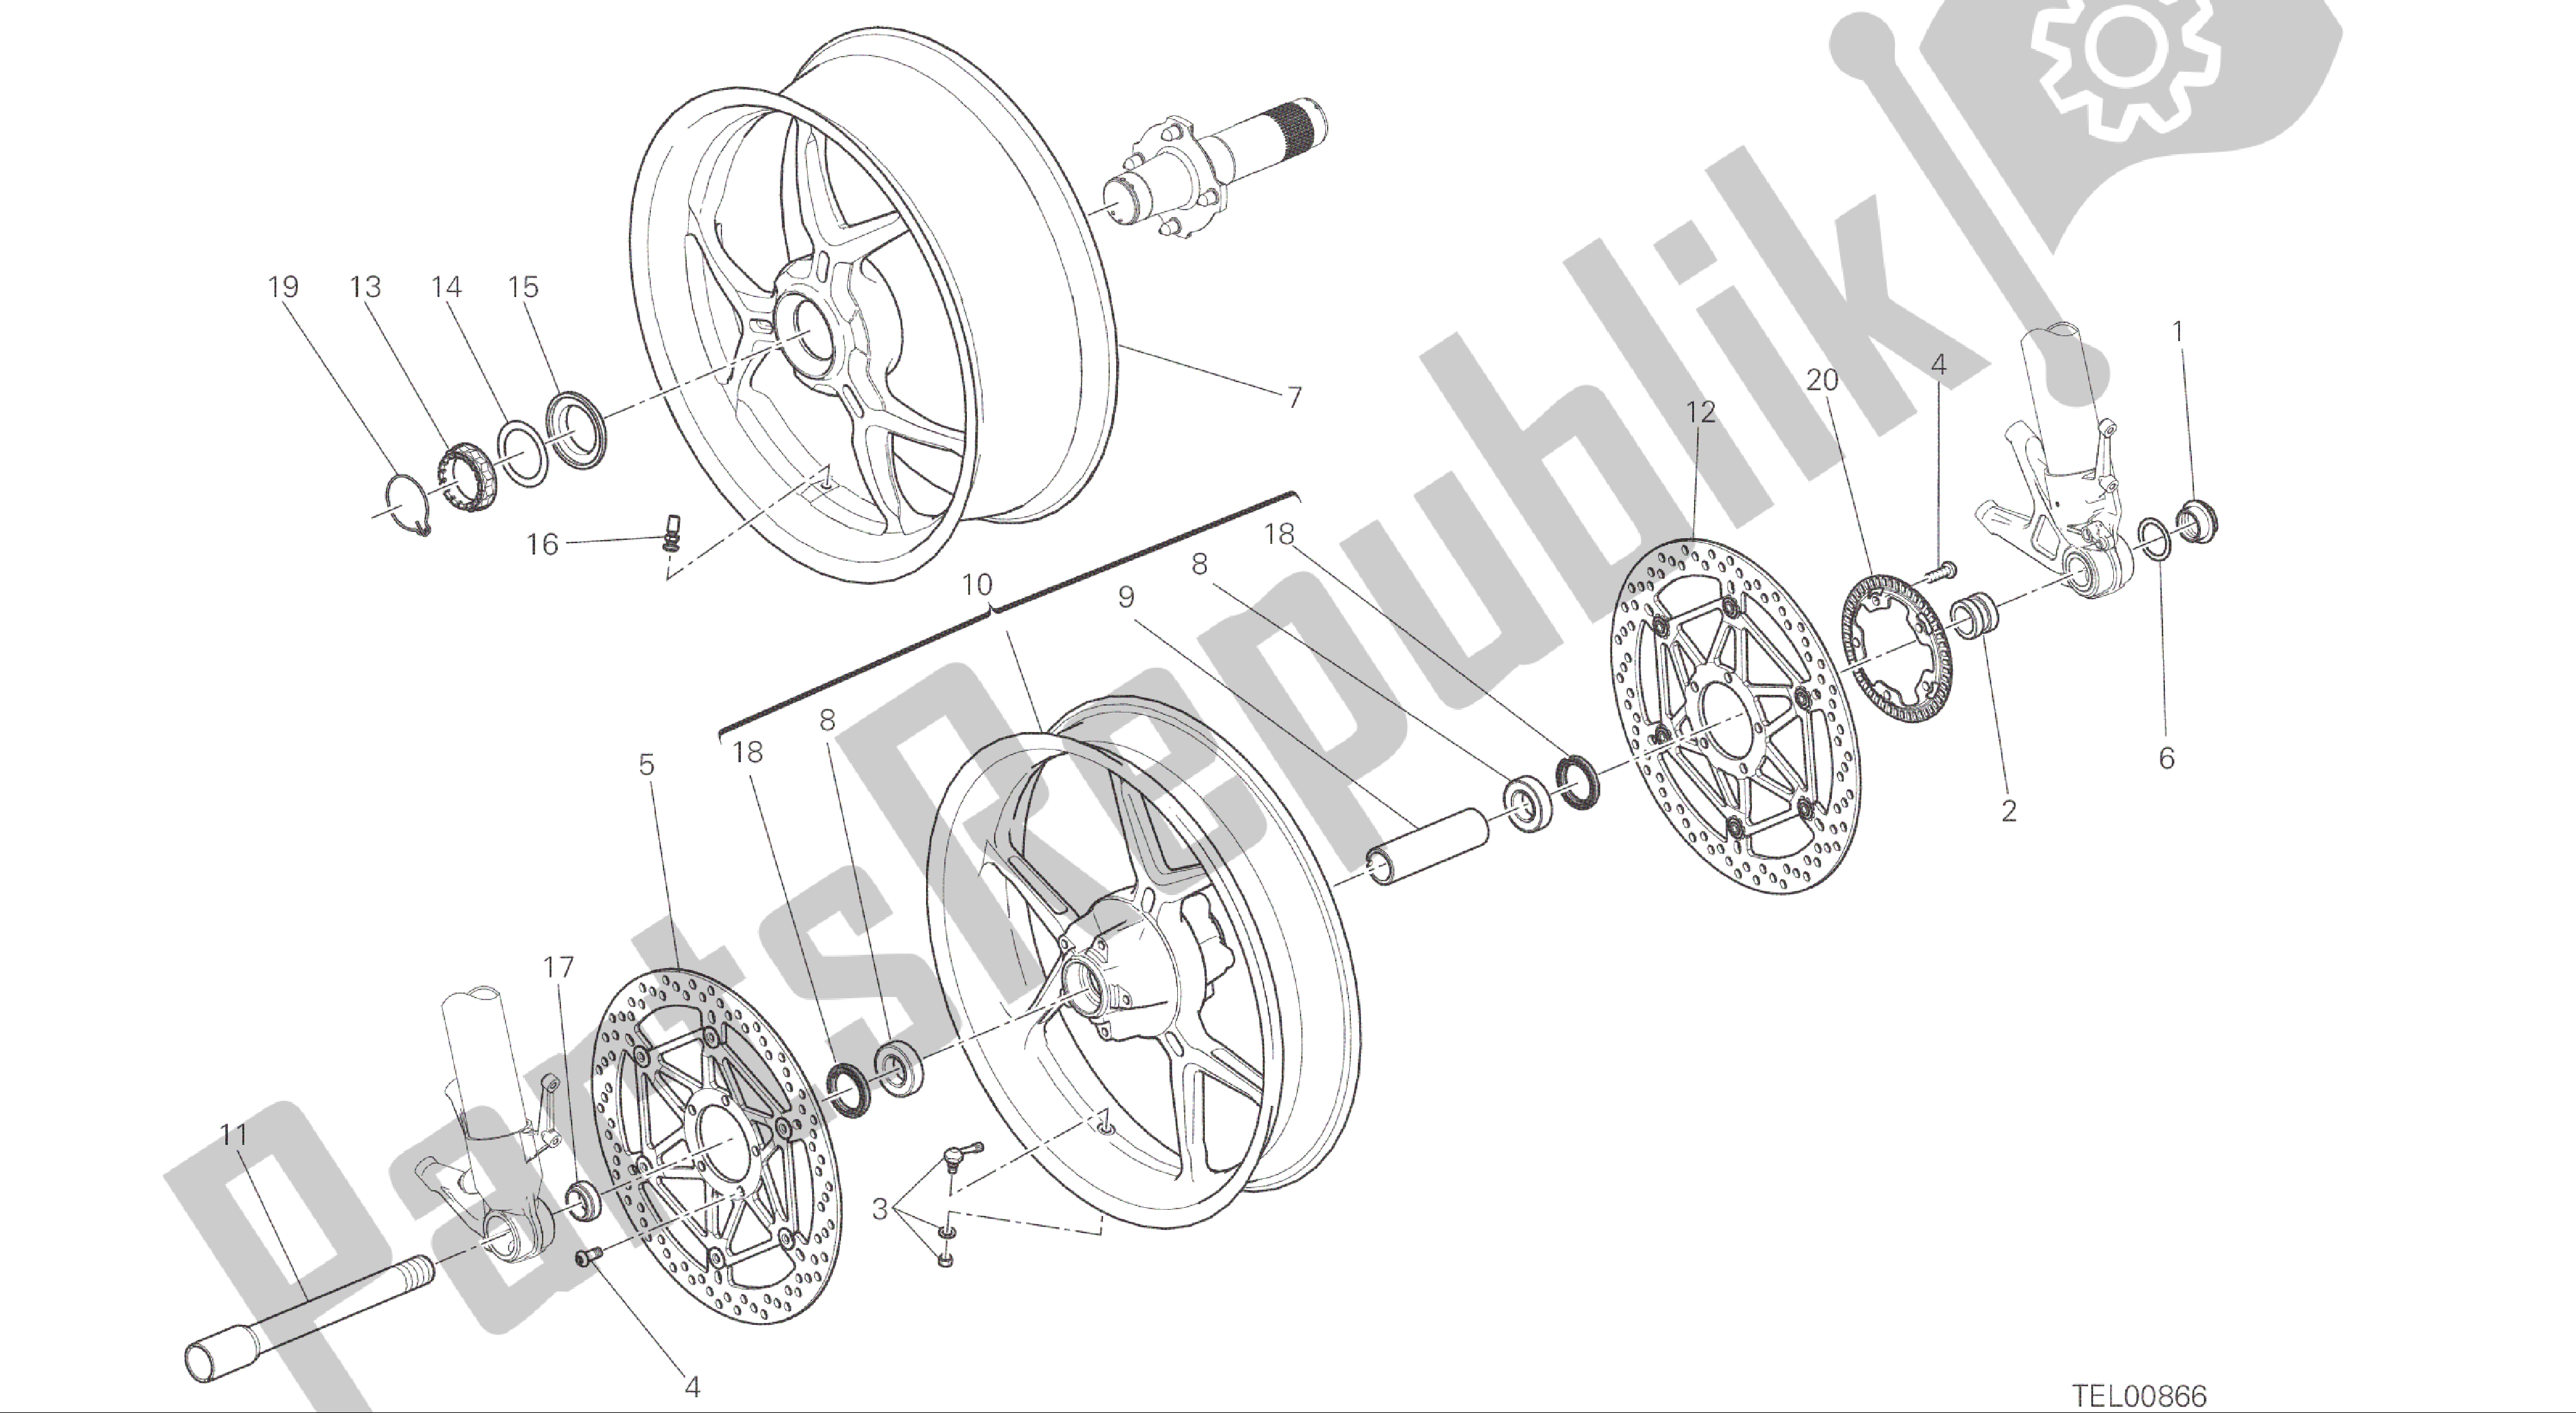 Todas las partes para Dibujo 026 - Ruota Anteriore E Posteriore [mod: 1299; Xst: Marco De Grupo Aus, Eur, Fra, Jap, Twn] de Ducati Panigale ABS 1299 2016